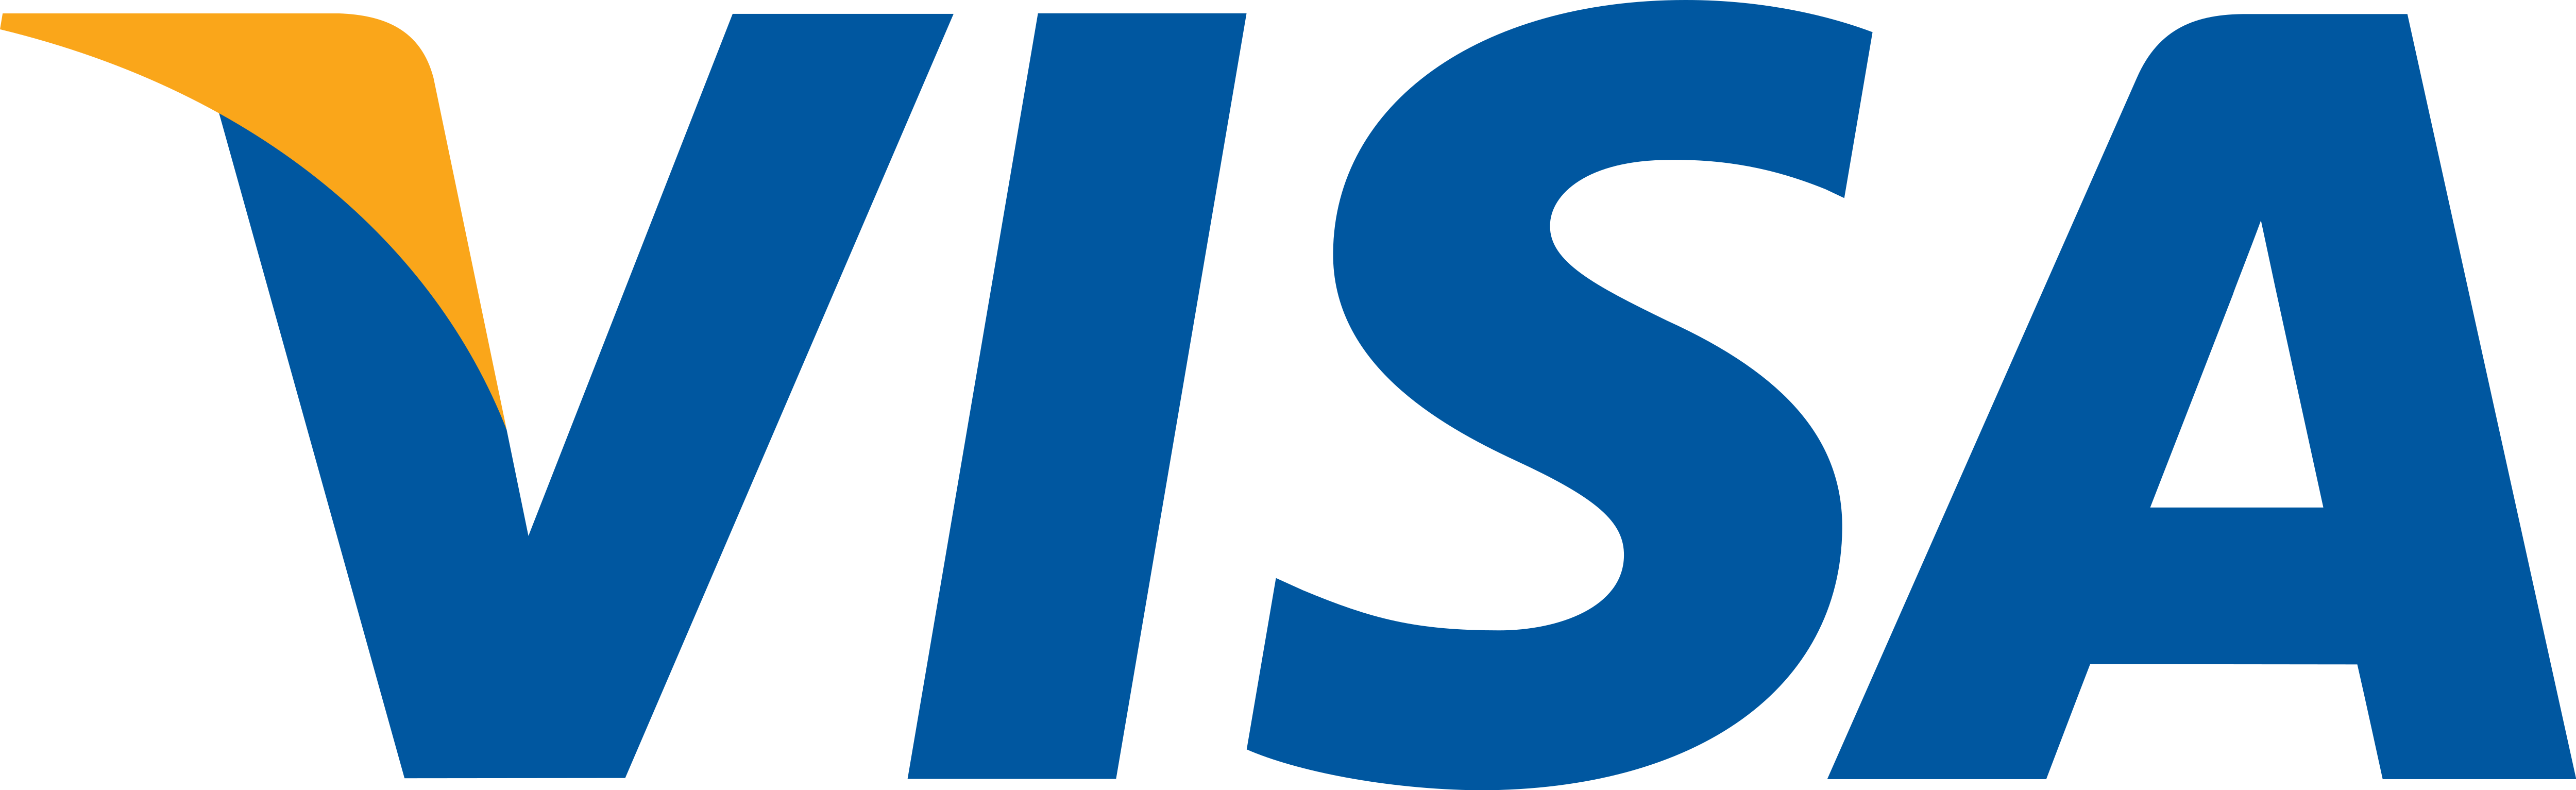 Logo des visas